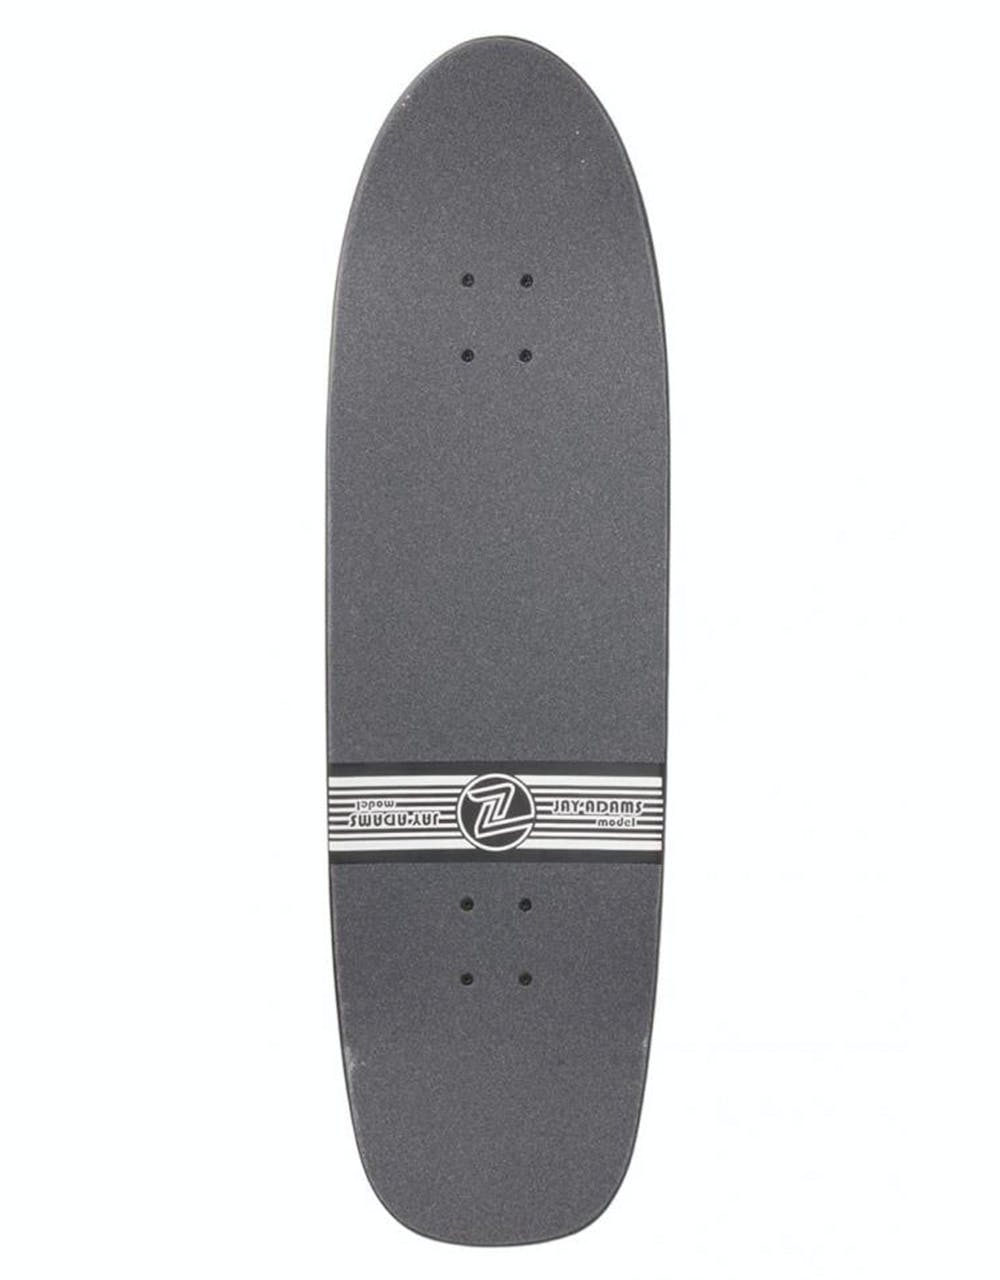 Z Flex Jay Adams Metalflake Cruiser Skateboard - 9.5" x 33"